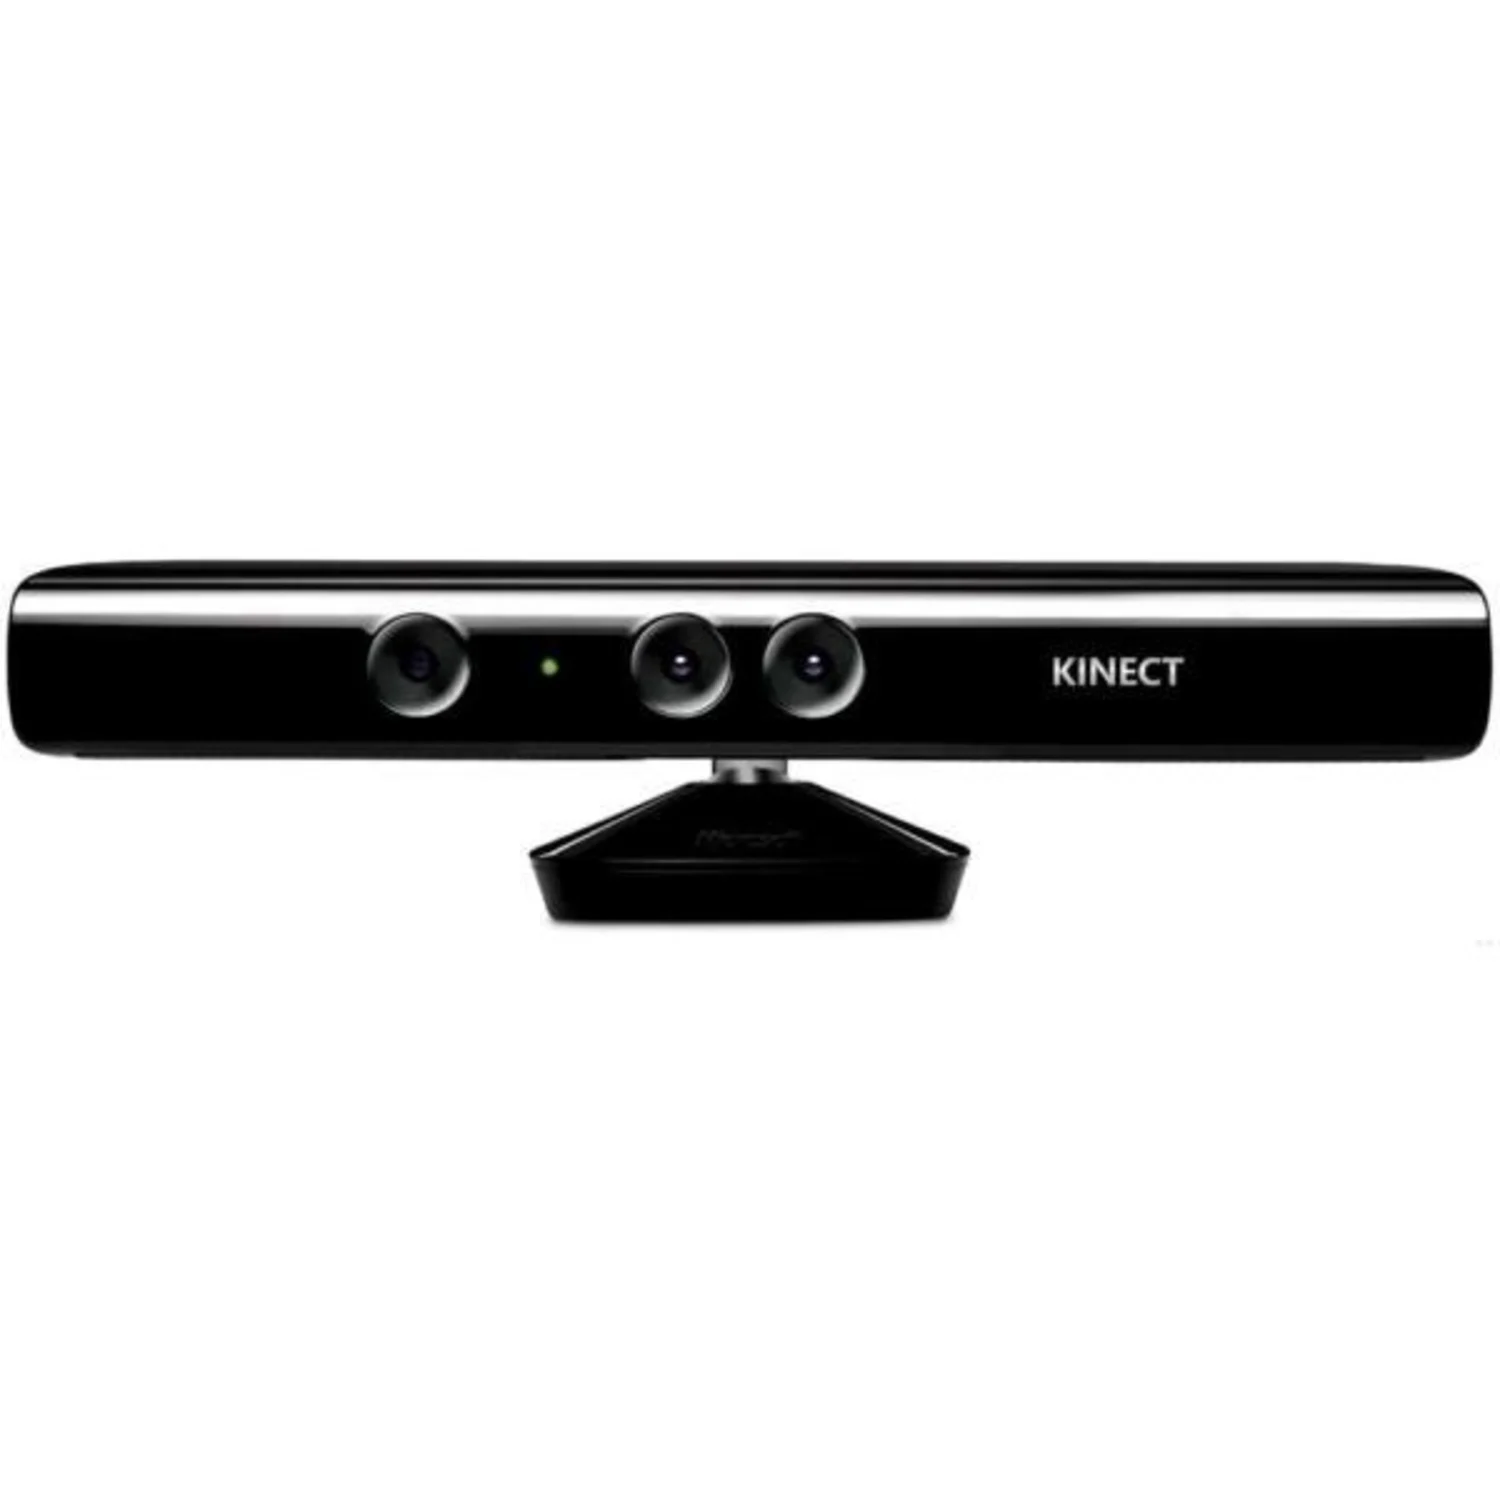 Sensor Kinect X360A Recondicionado Para Pc